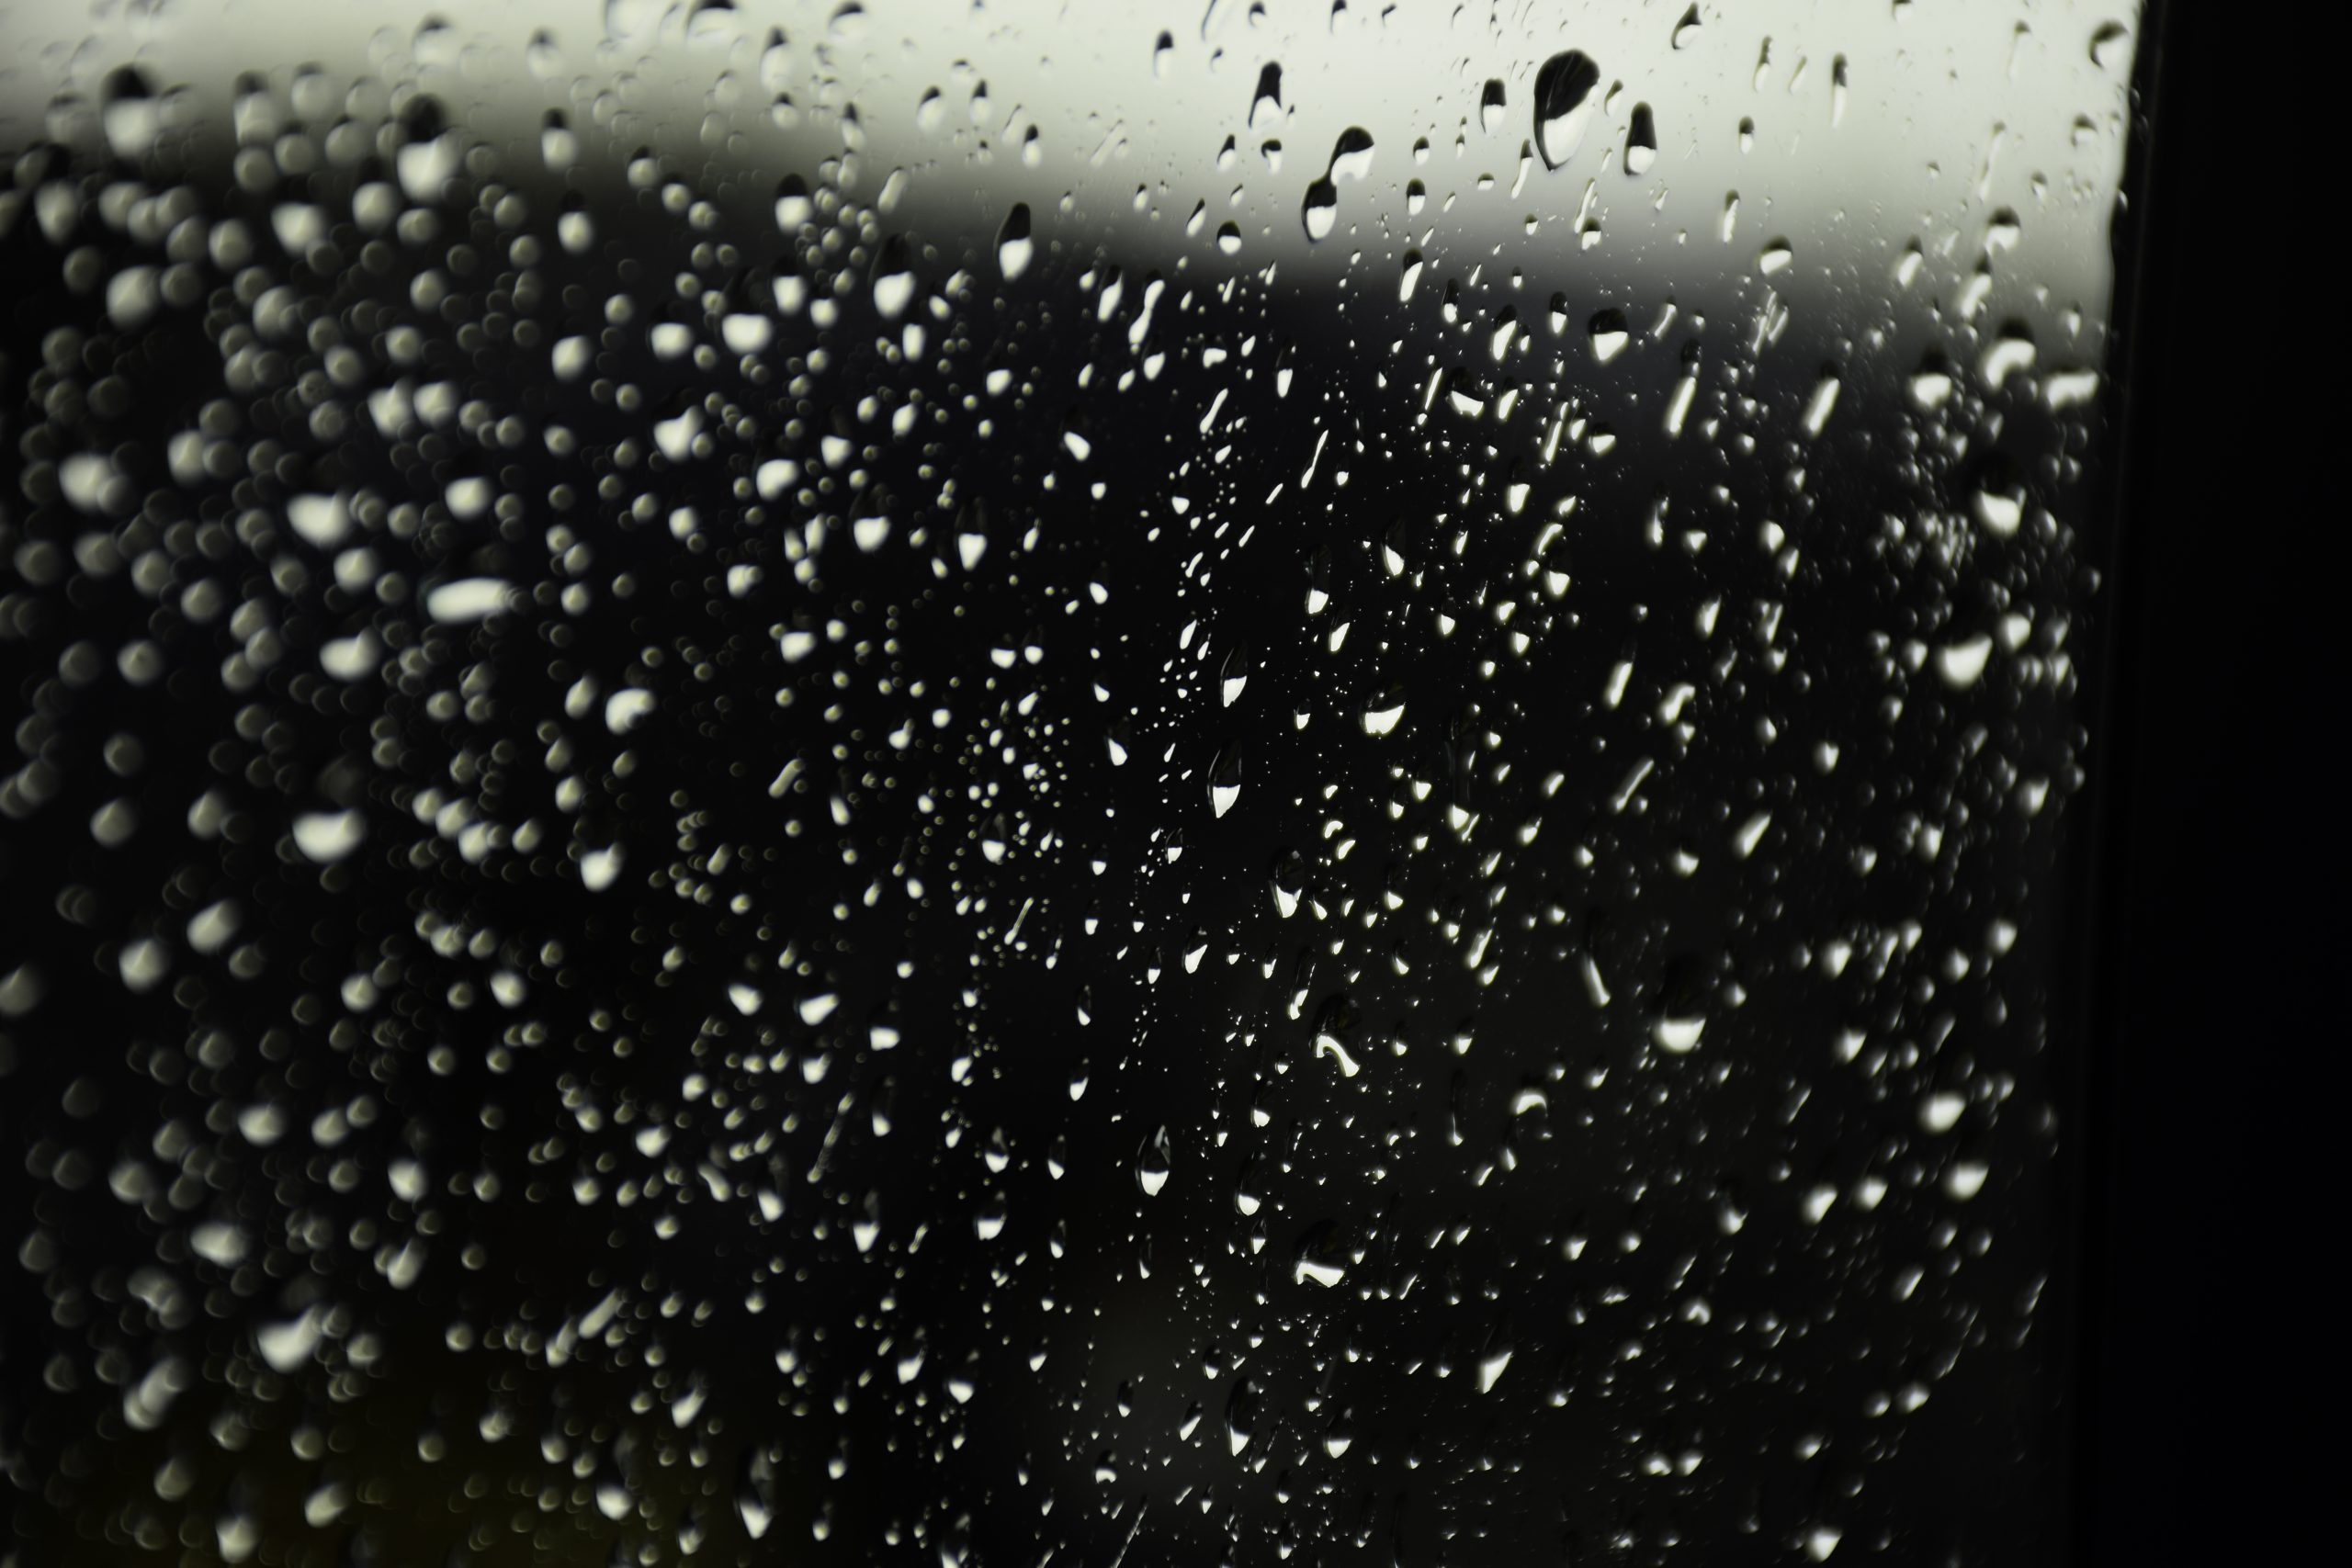 Car's window mirror during rain